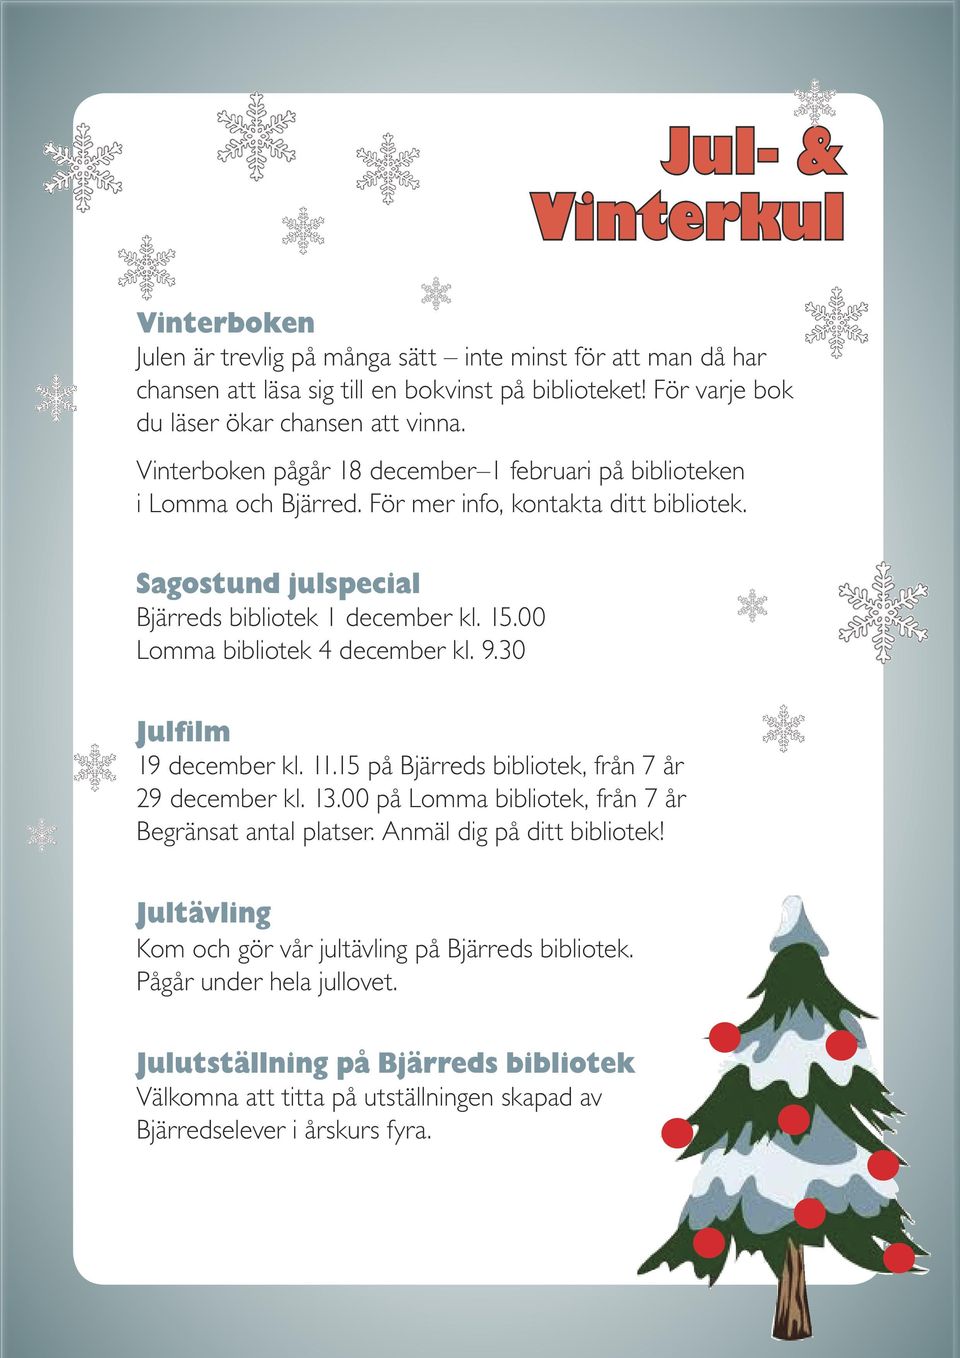 00 Lomma bibliotek 4 december kl. 9.30 Julfilm 19 december kl. 11.15 på Bjärreds bibliotek, från 7 år 29 december kl. 13.00 på Lomma bibliotek, från 7 år Begränsat antal platser.